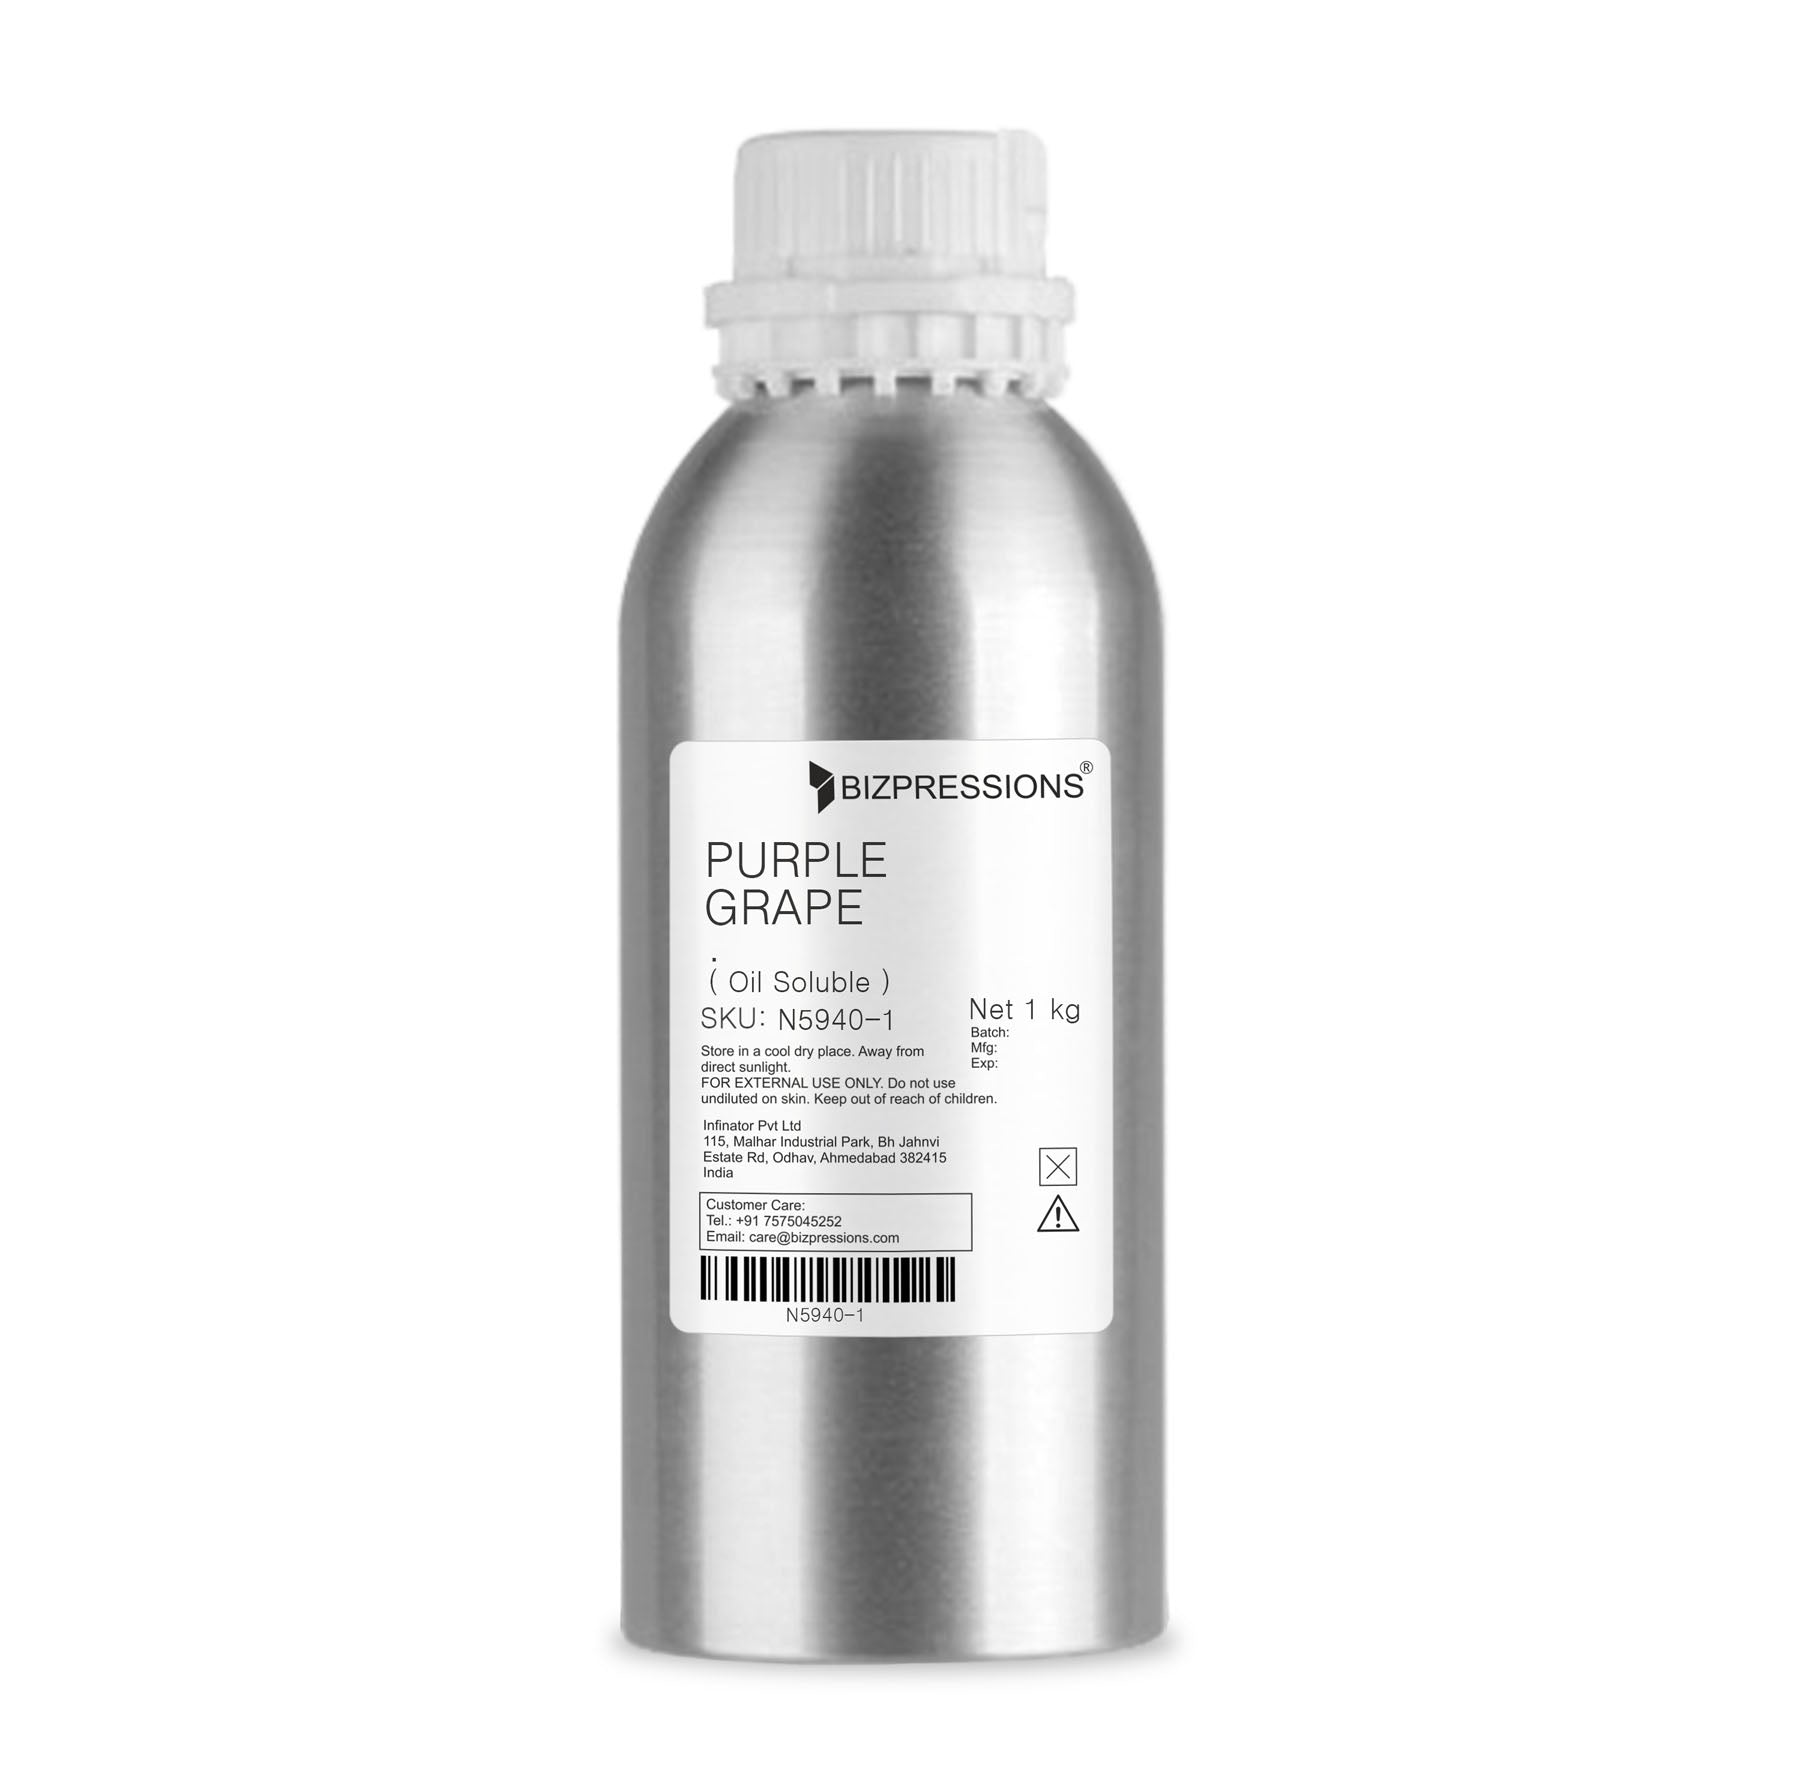 PURPLE GRAPE - Fragrance ( Oil Soluble ) - 1 kg